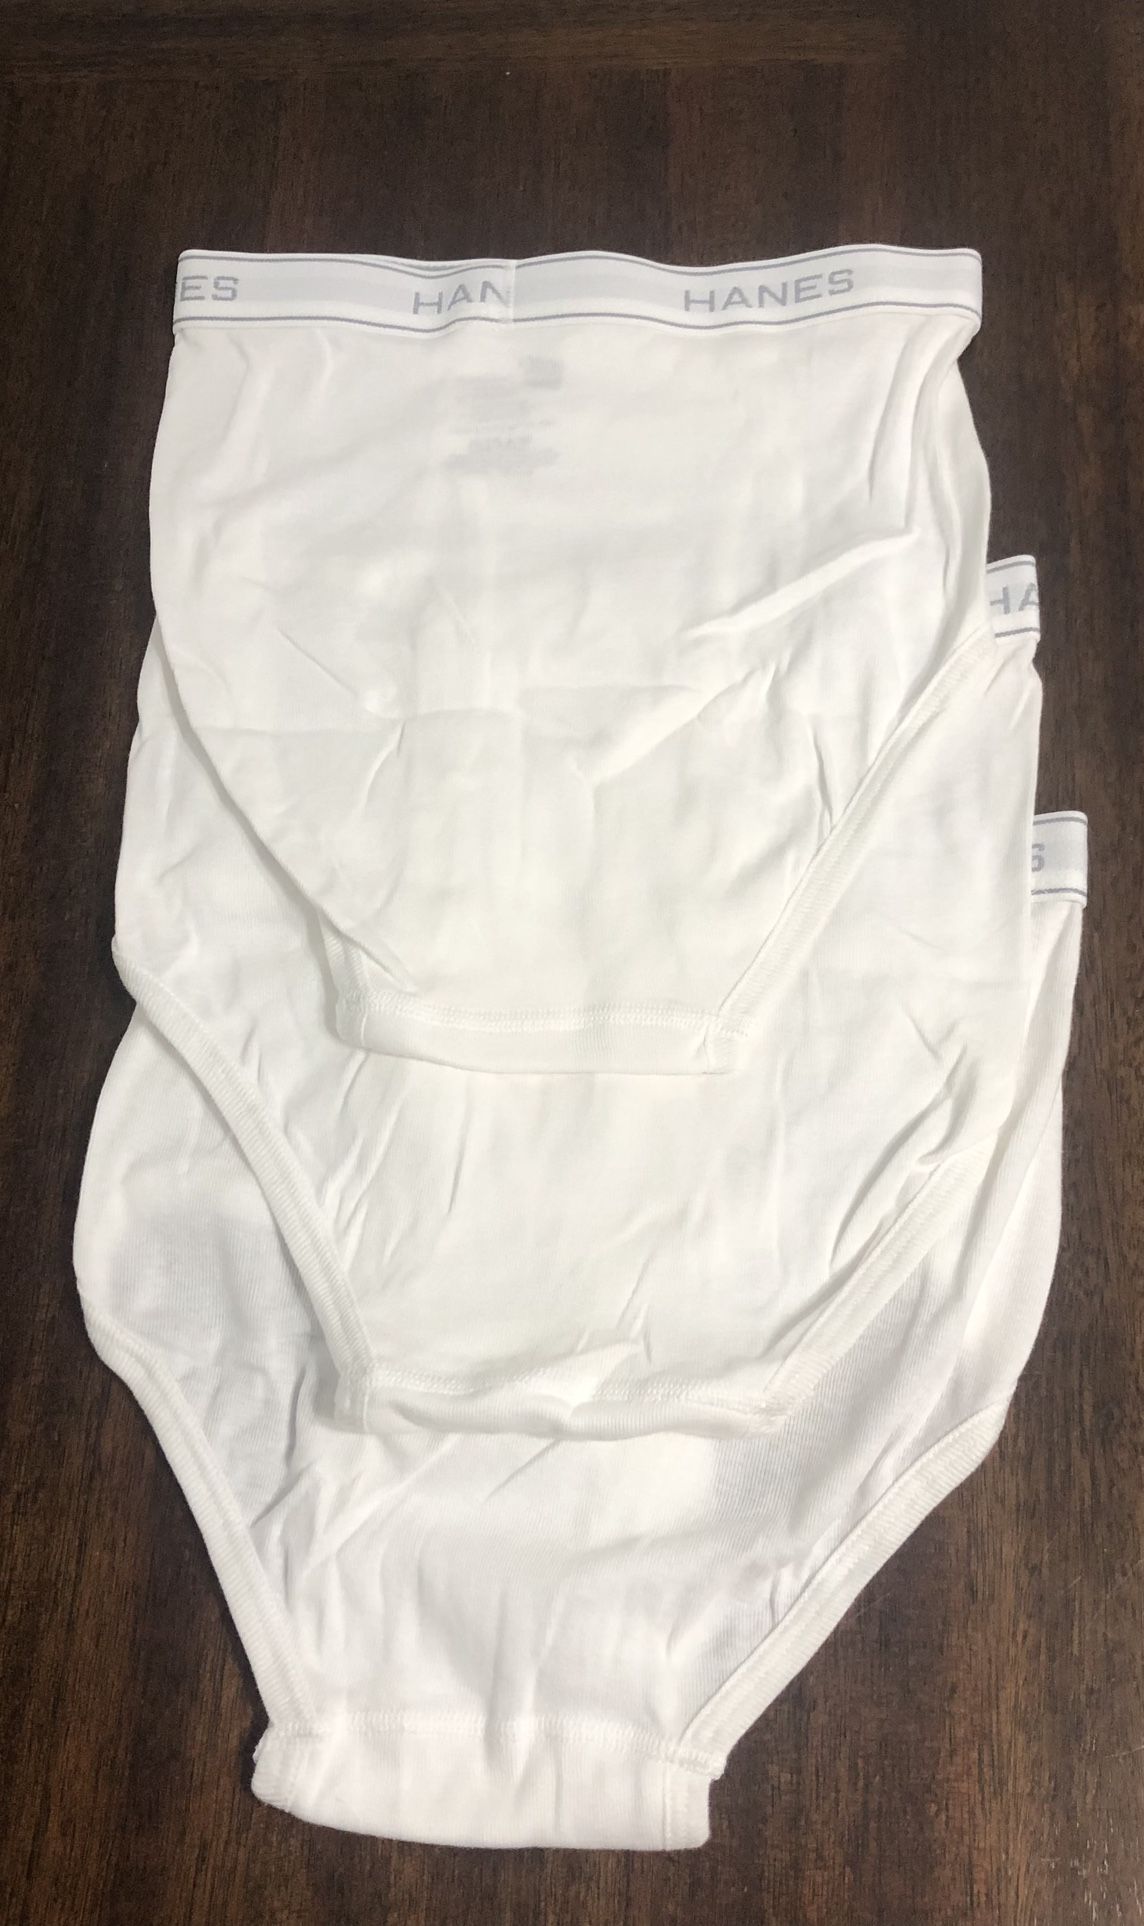 Hanes white briefs/underwear (Large) 24 pairs for Sale in Chicago, IL -  OfferUp